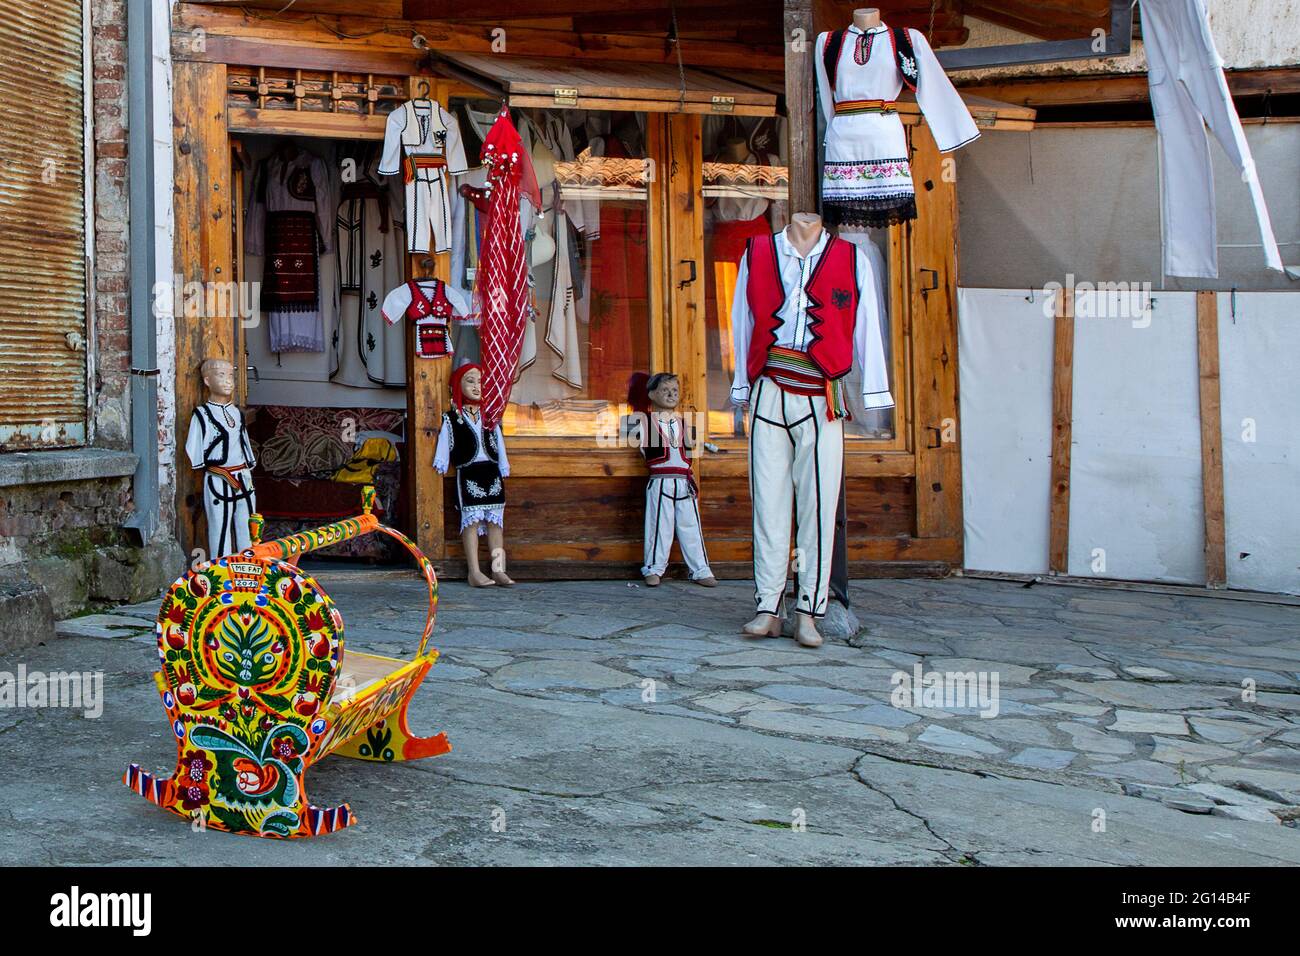 Shop selling national costumes of Kosovo on cobblestone street, in Gjakova, Kosovo. Stock Photo